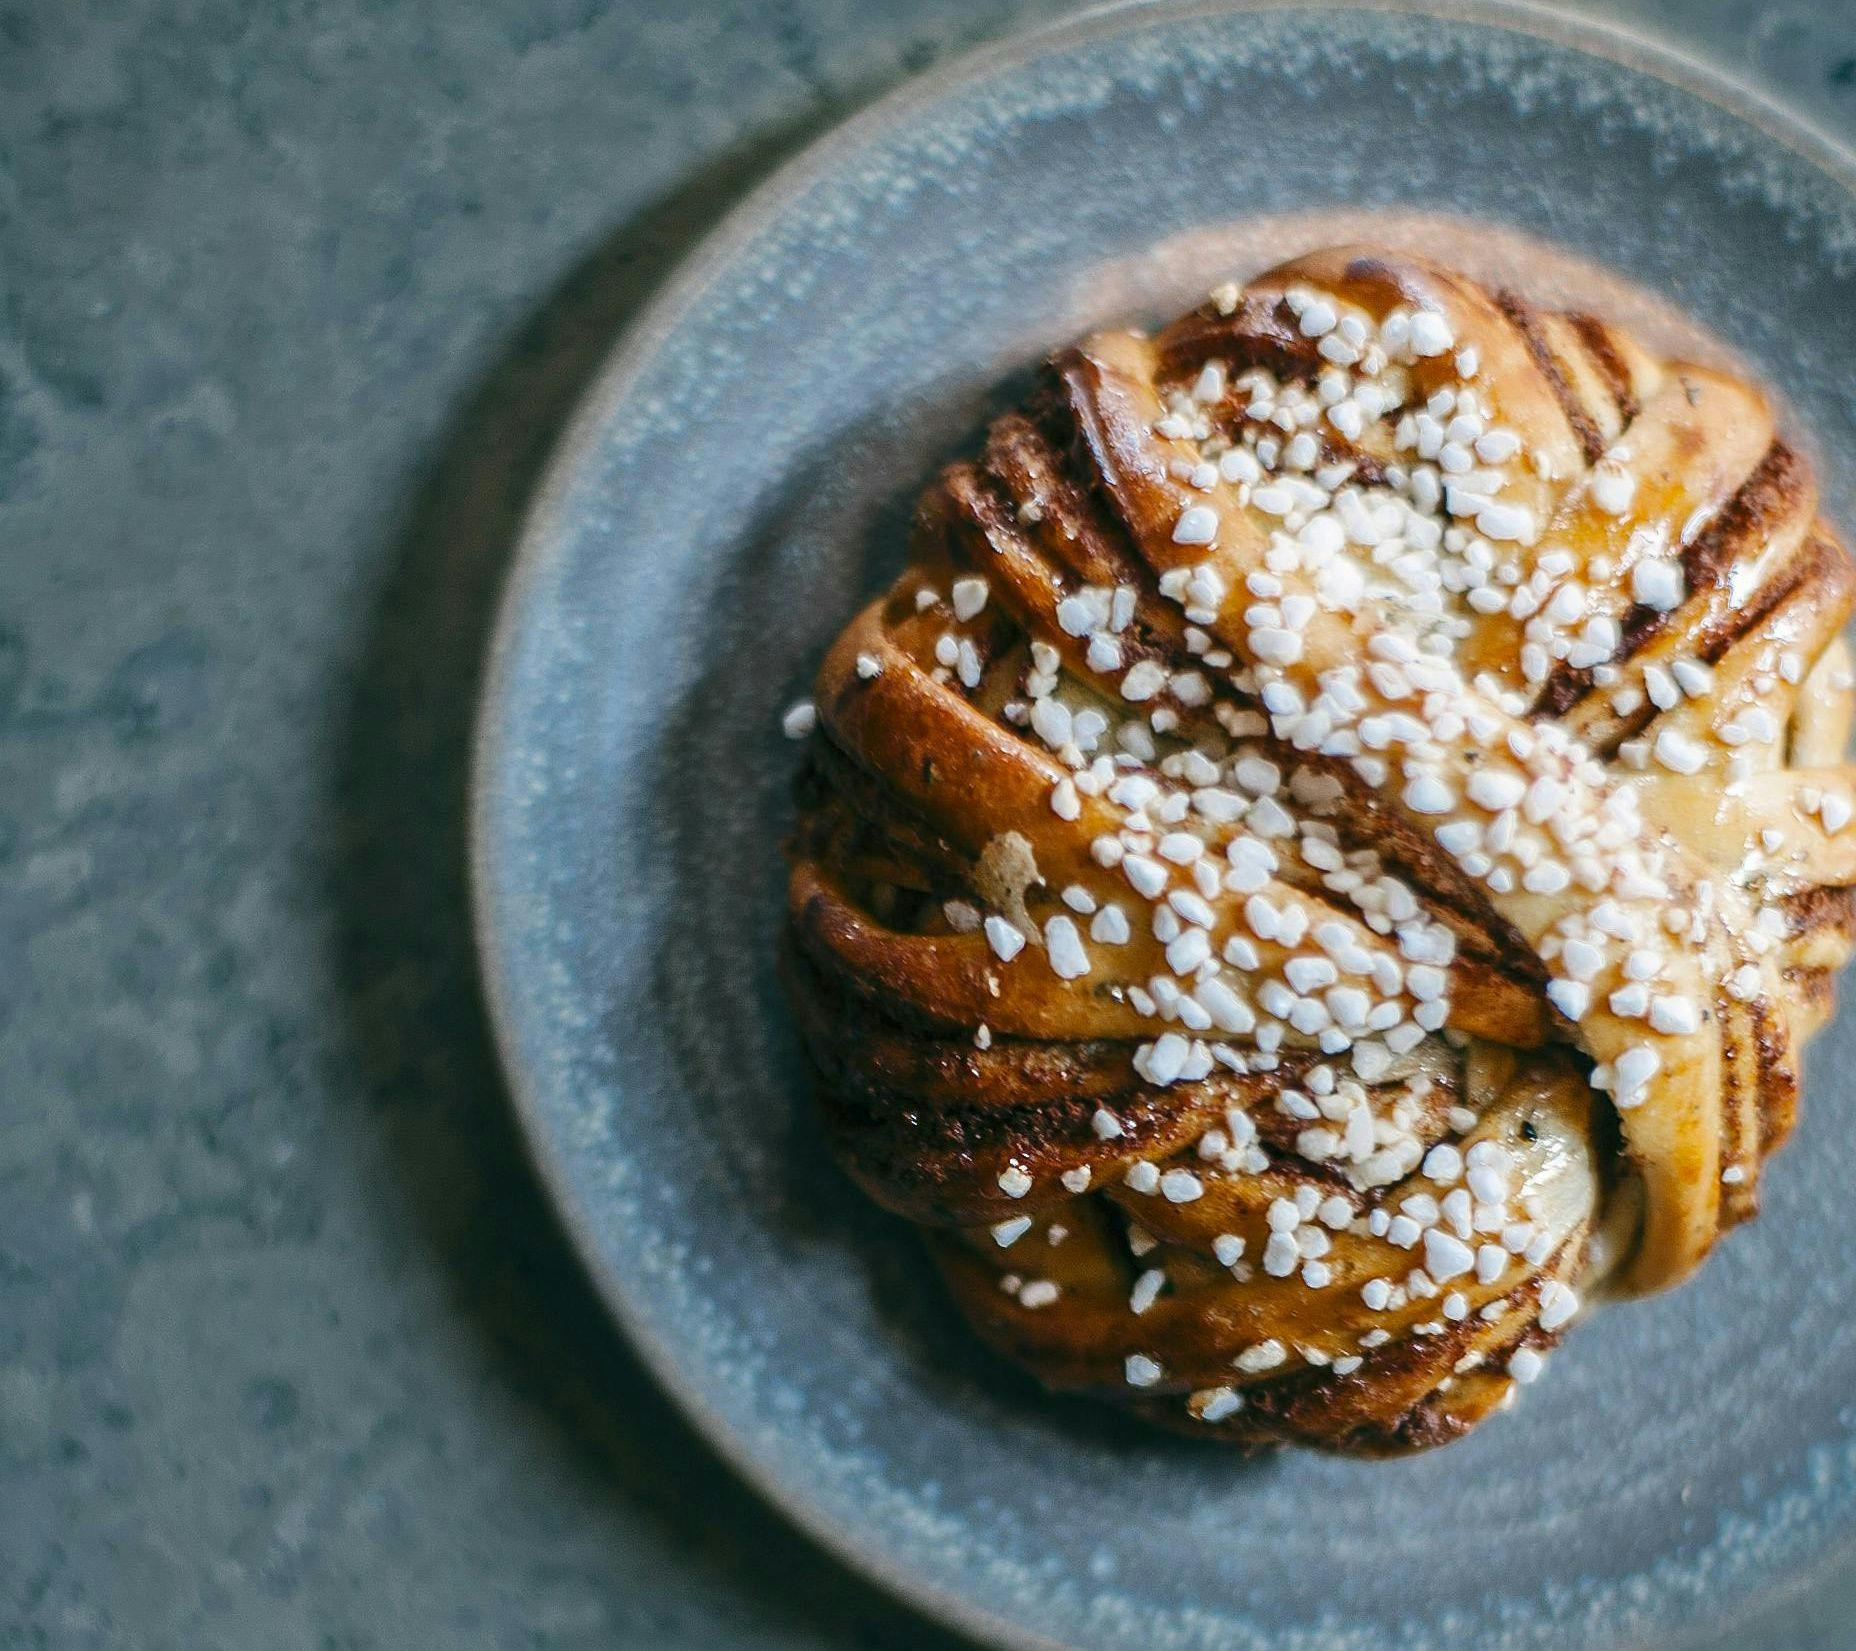 Cinnamon Bun "kanelbulle" a Swedish classic baked good